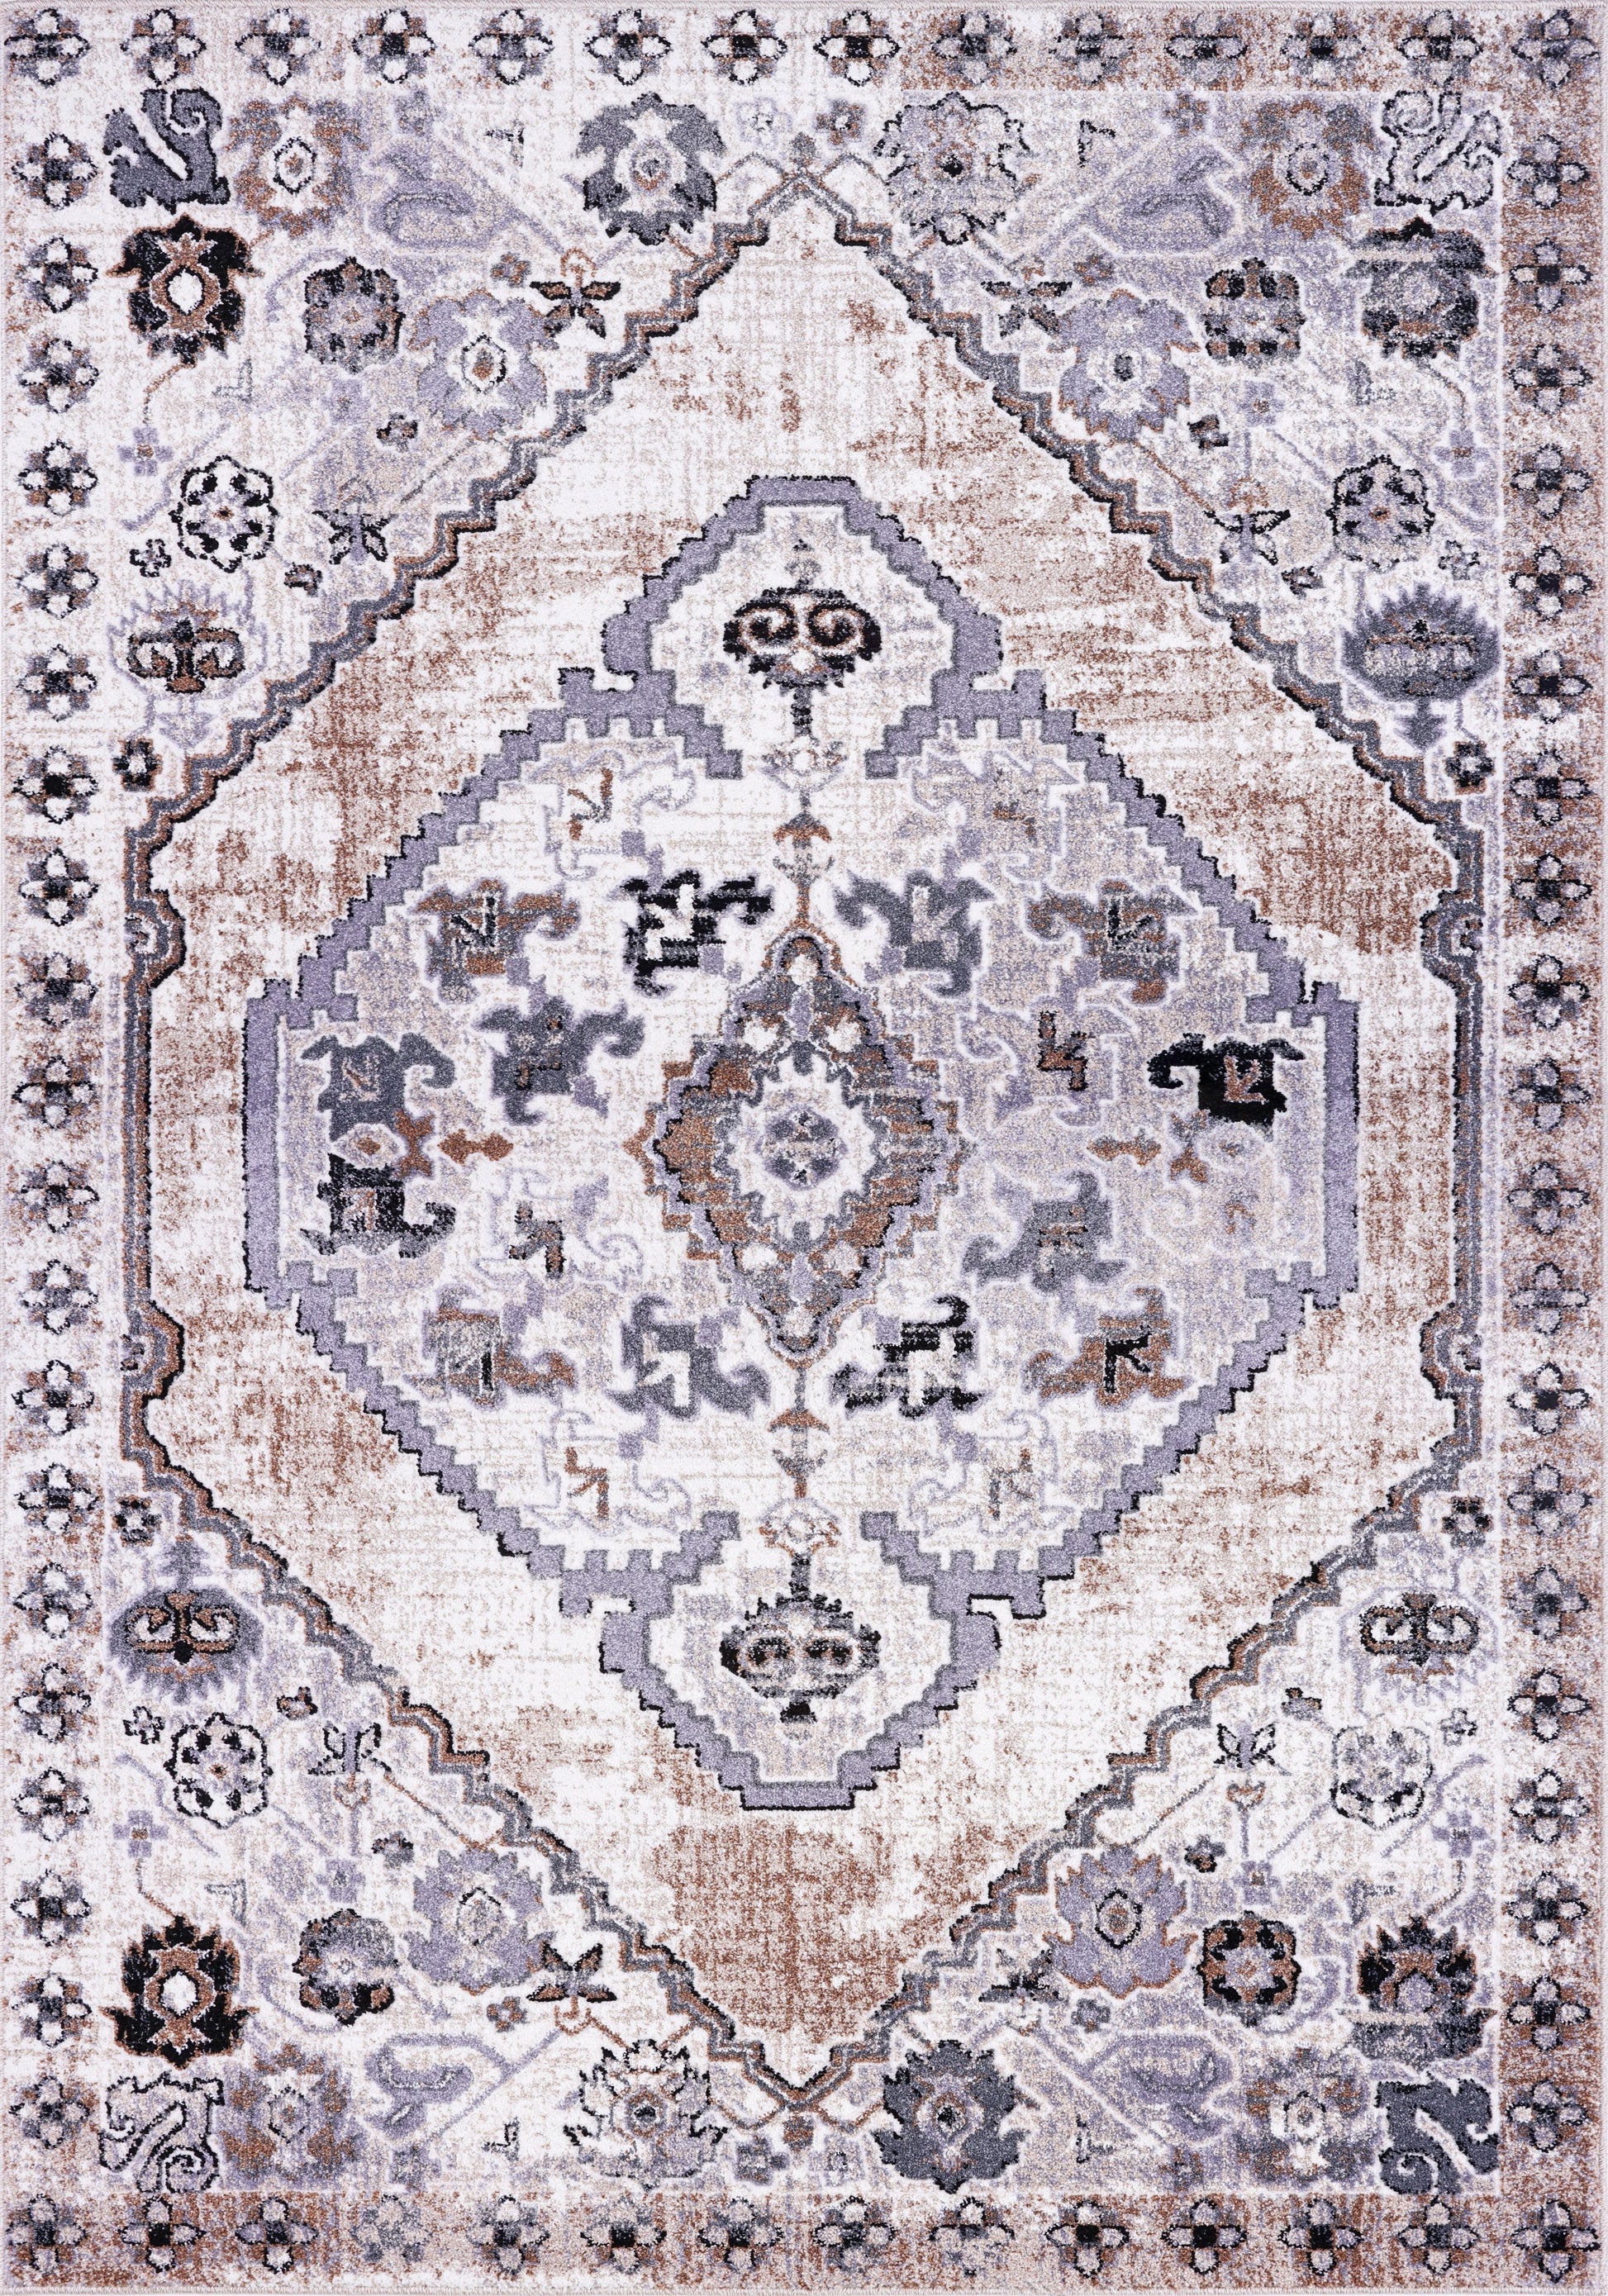 ladole rugs everest collection chania traditional european durable soft beige and cream mat 2x317 x 27 50cm x 80cm 2x3 Doormat, Entrance, Balcony, Bathroom, Washroom